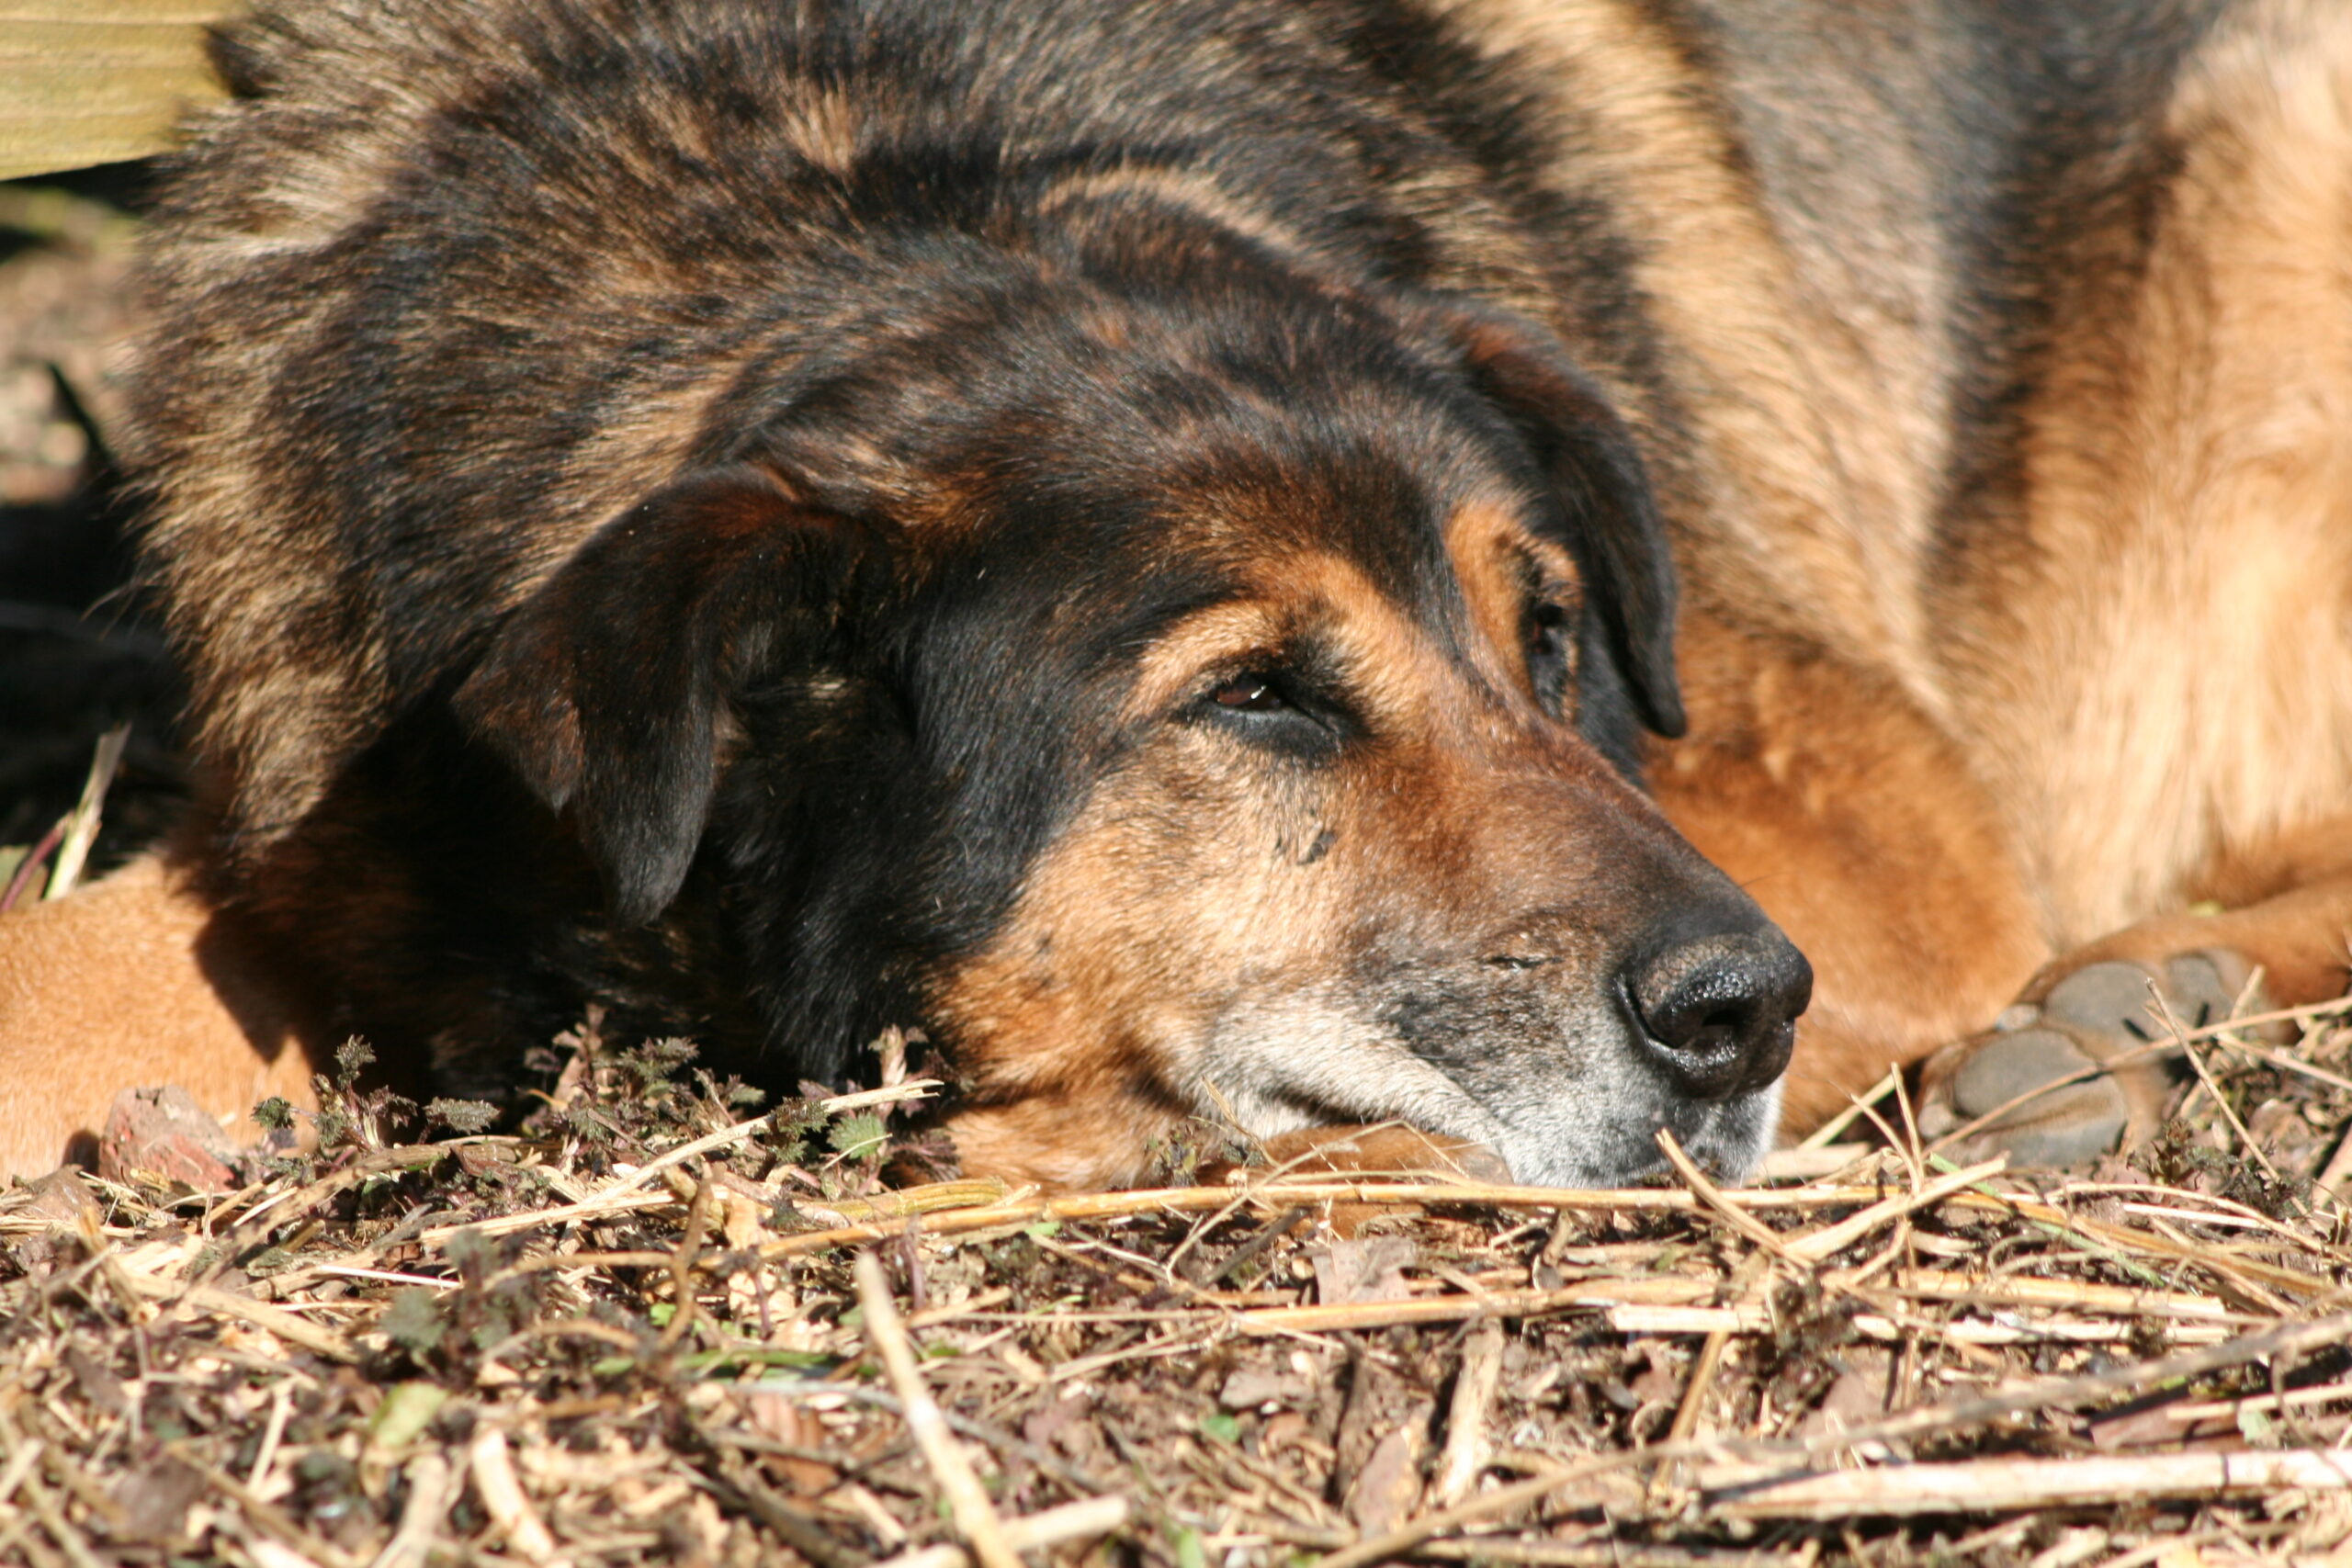 Analbeutelentzündung Hunde selber behandeln.